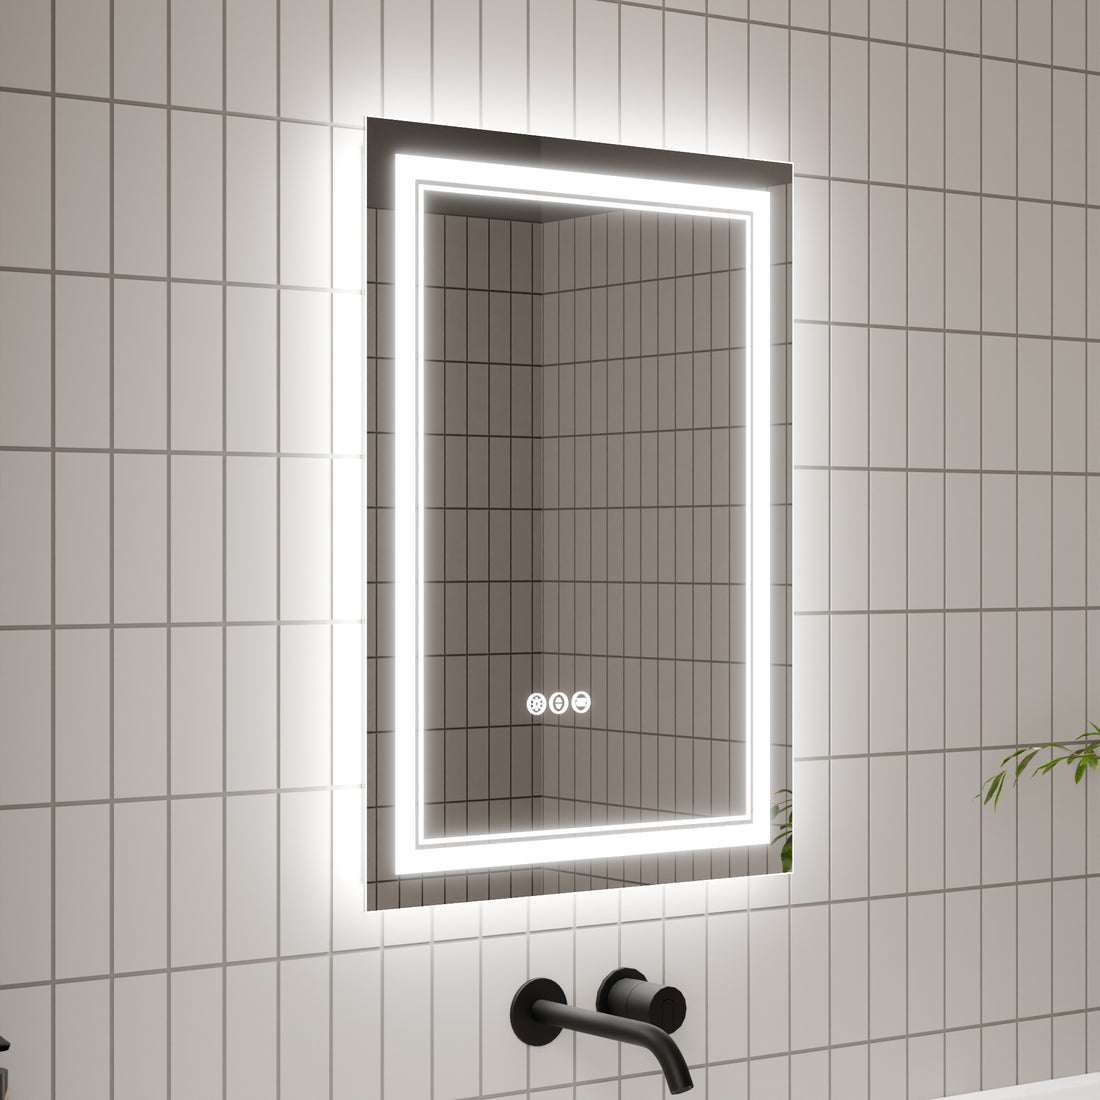 LED Bathroom Mirror, 20x28 inch Bathroom Vanity white-aluminum